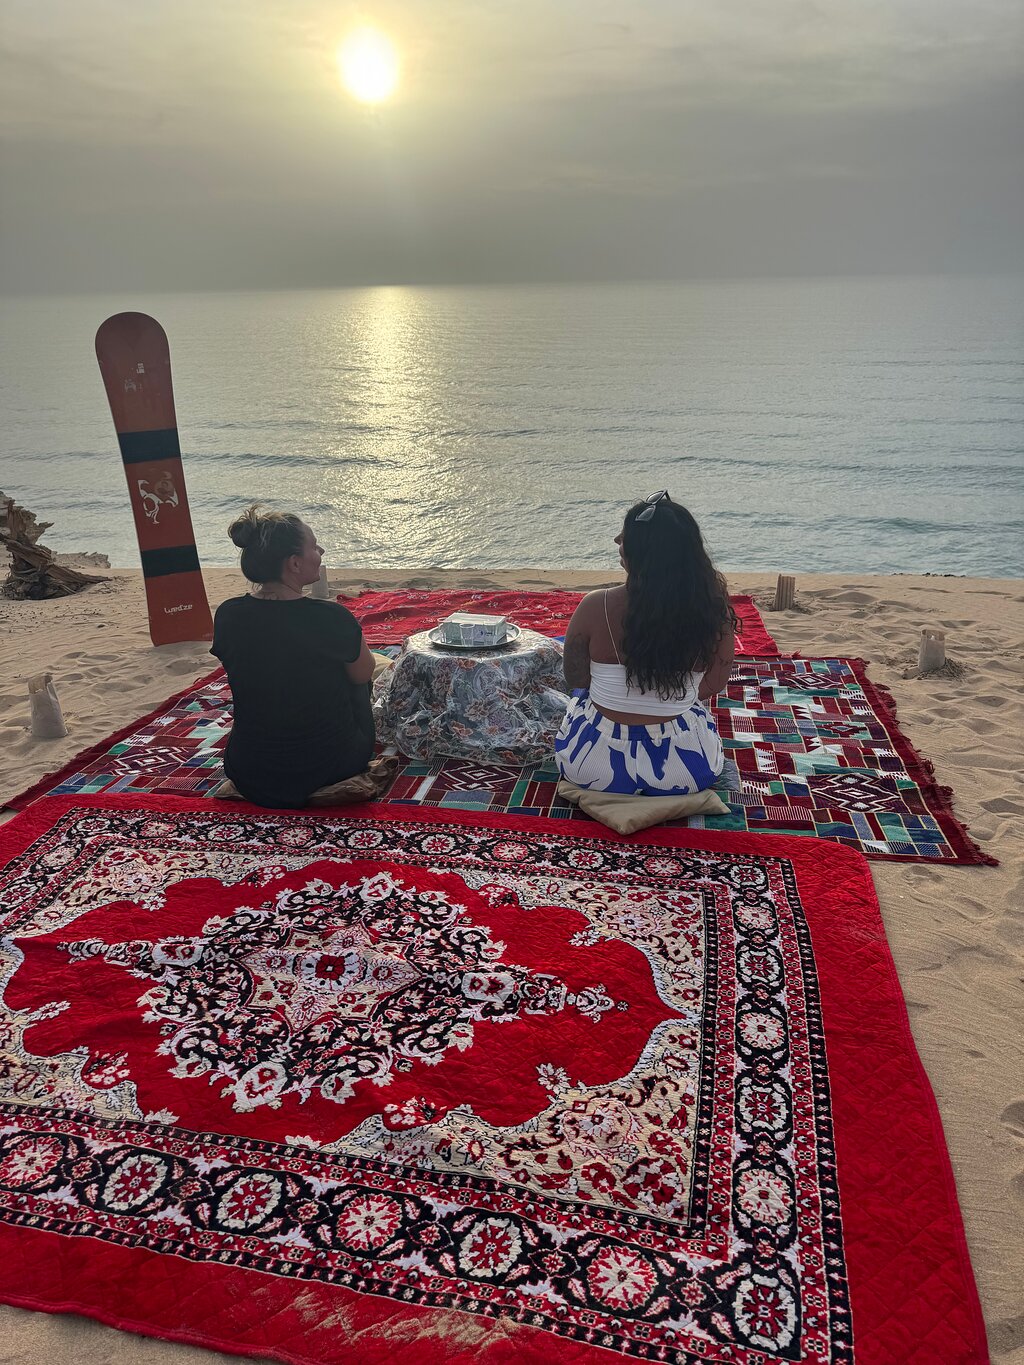 Sandboarding with Panoramic Views of the ocean and Agadir Desert